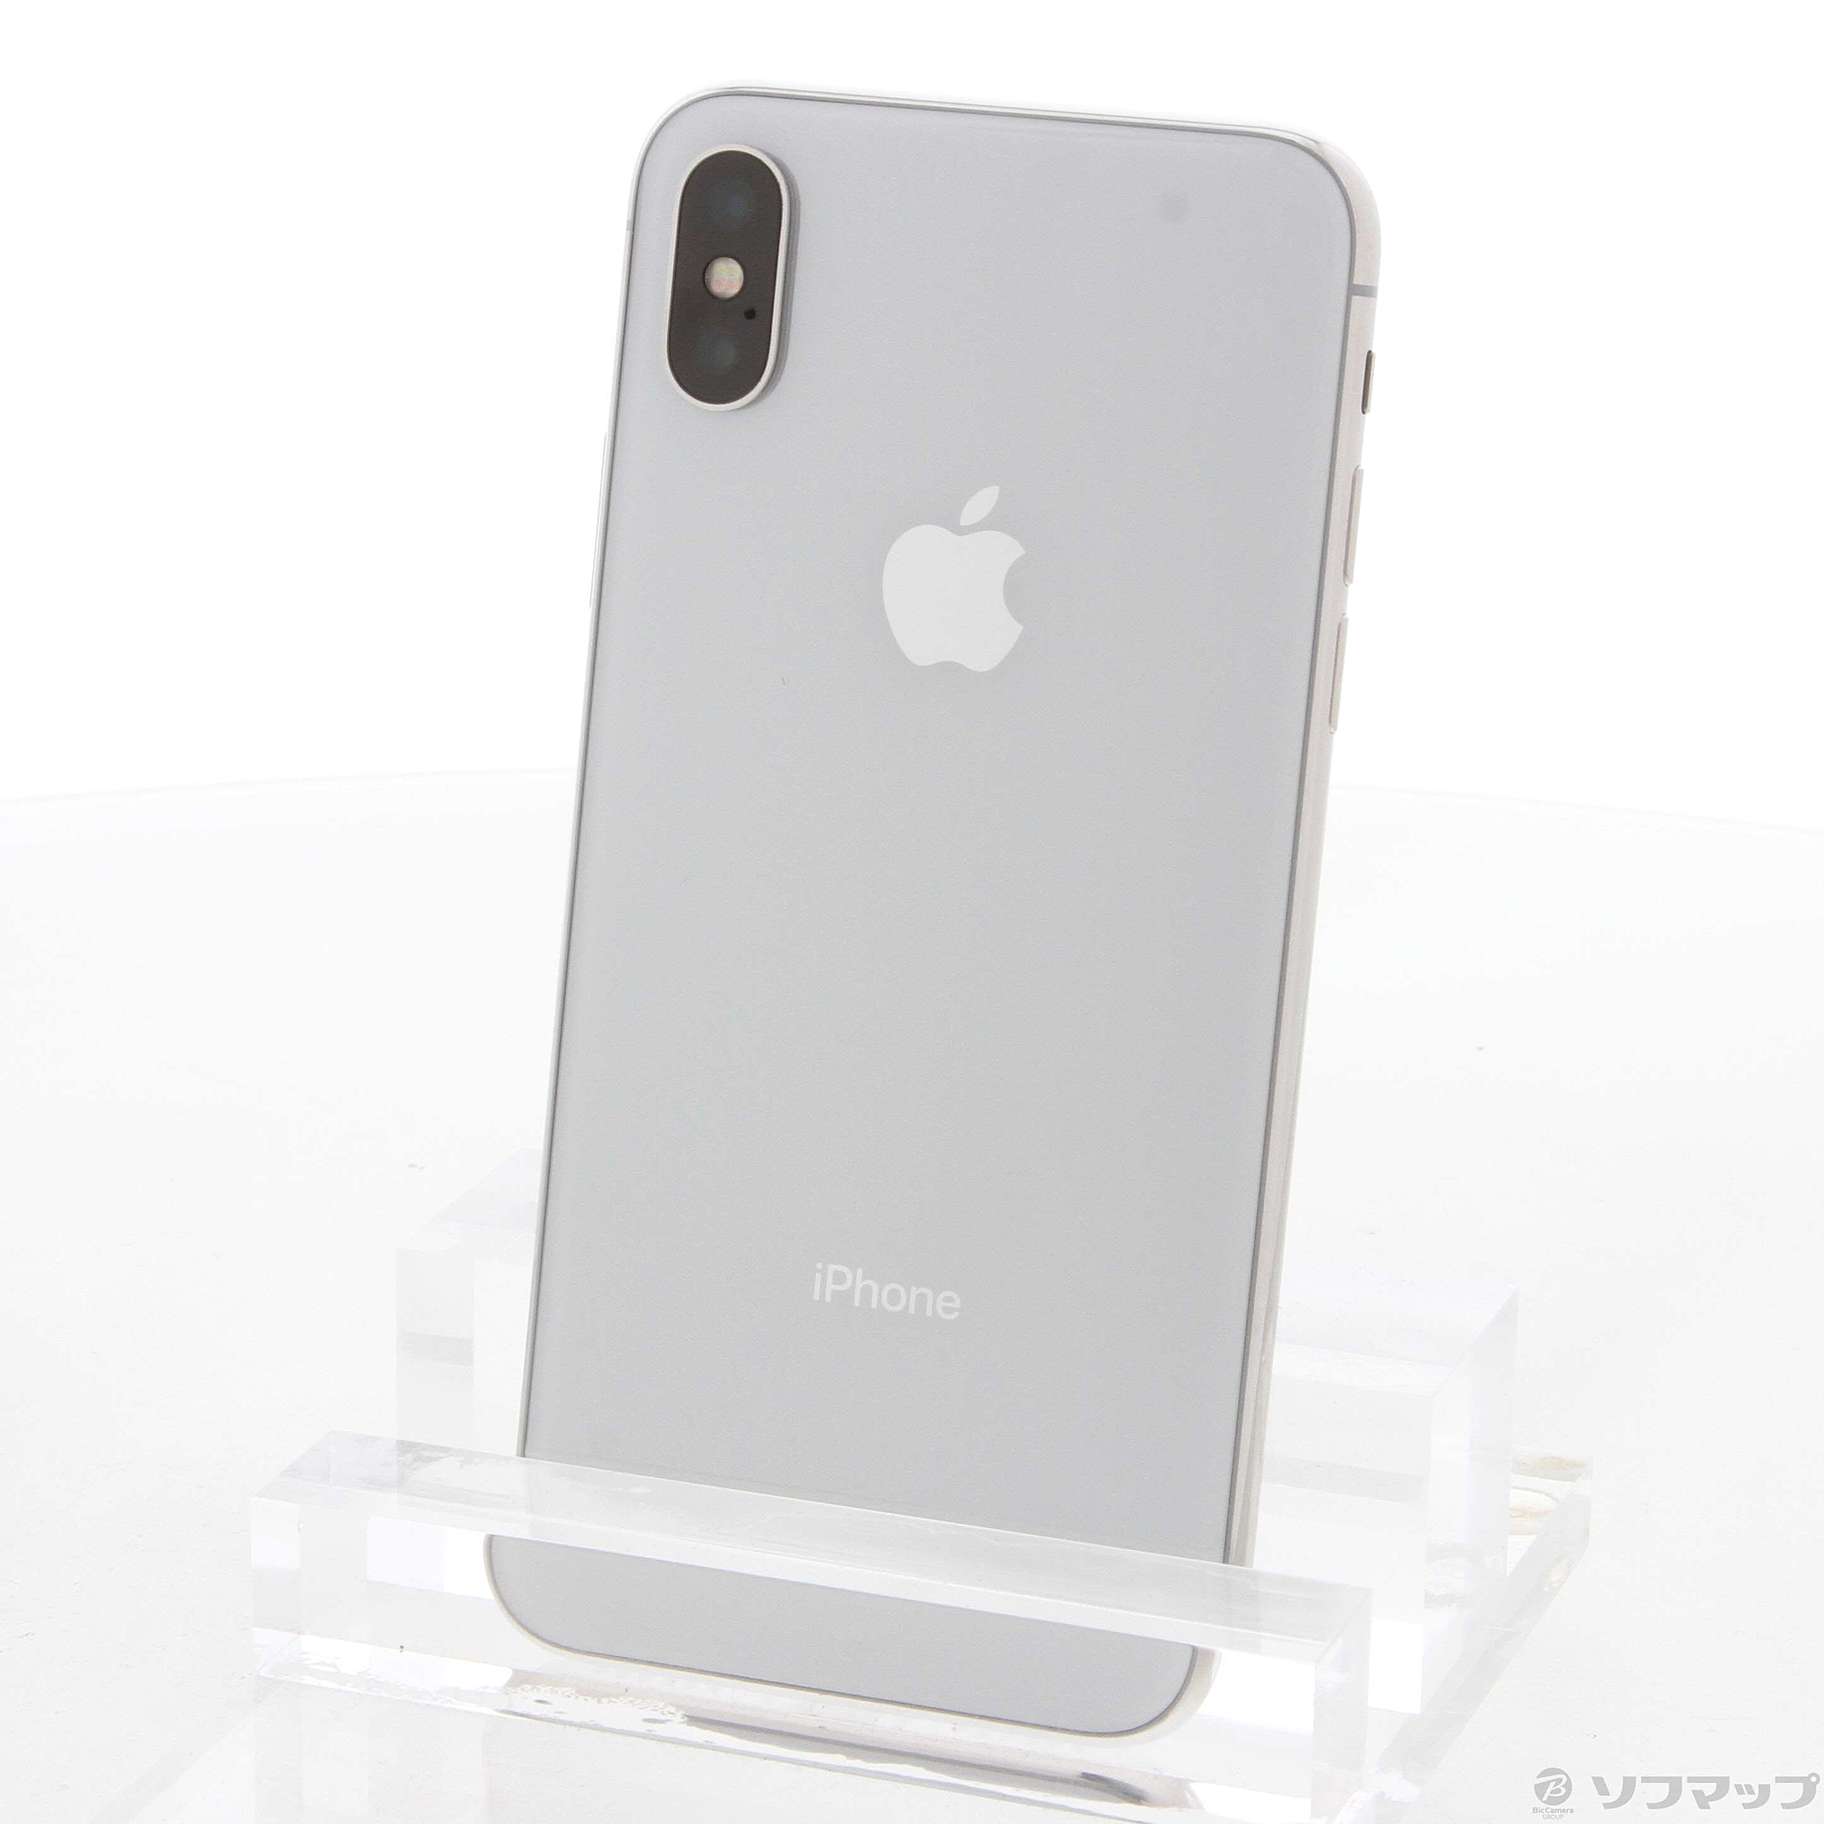 Apple iPhone X SIMフリー 64GB シルバー iPhoneX - スマートフォン本体